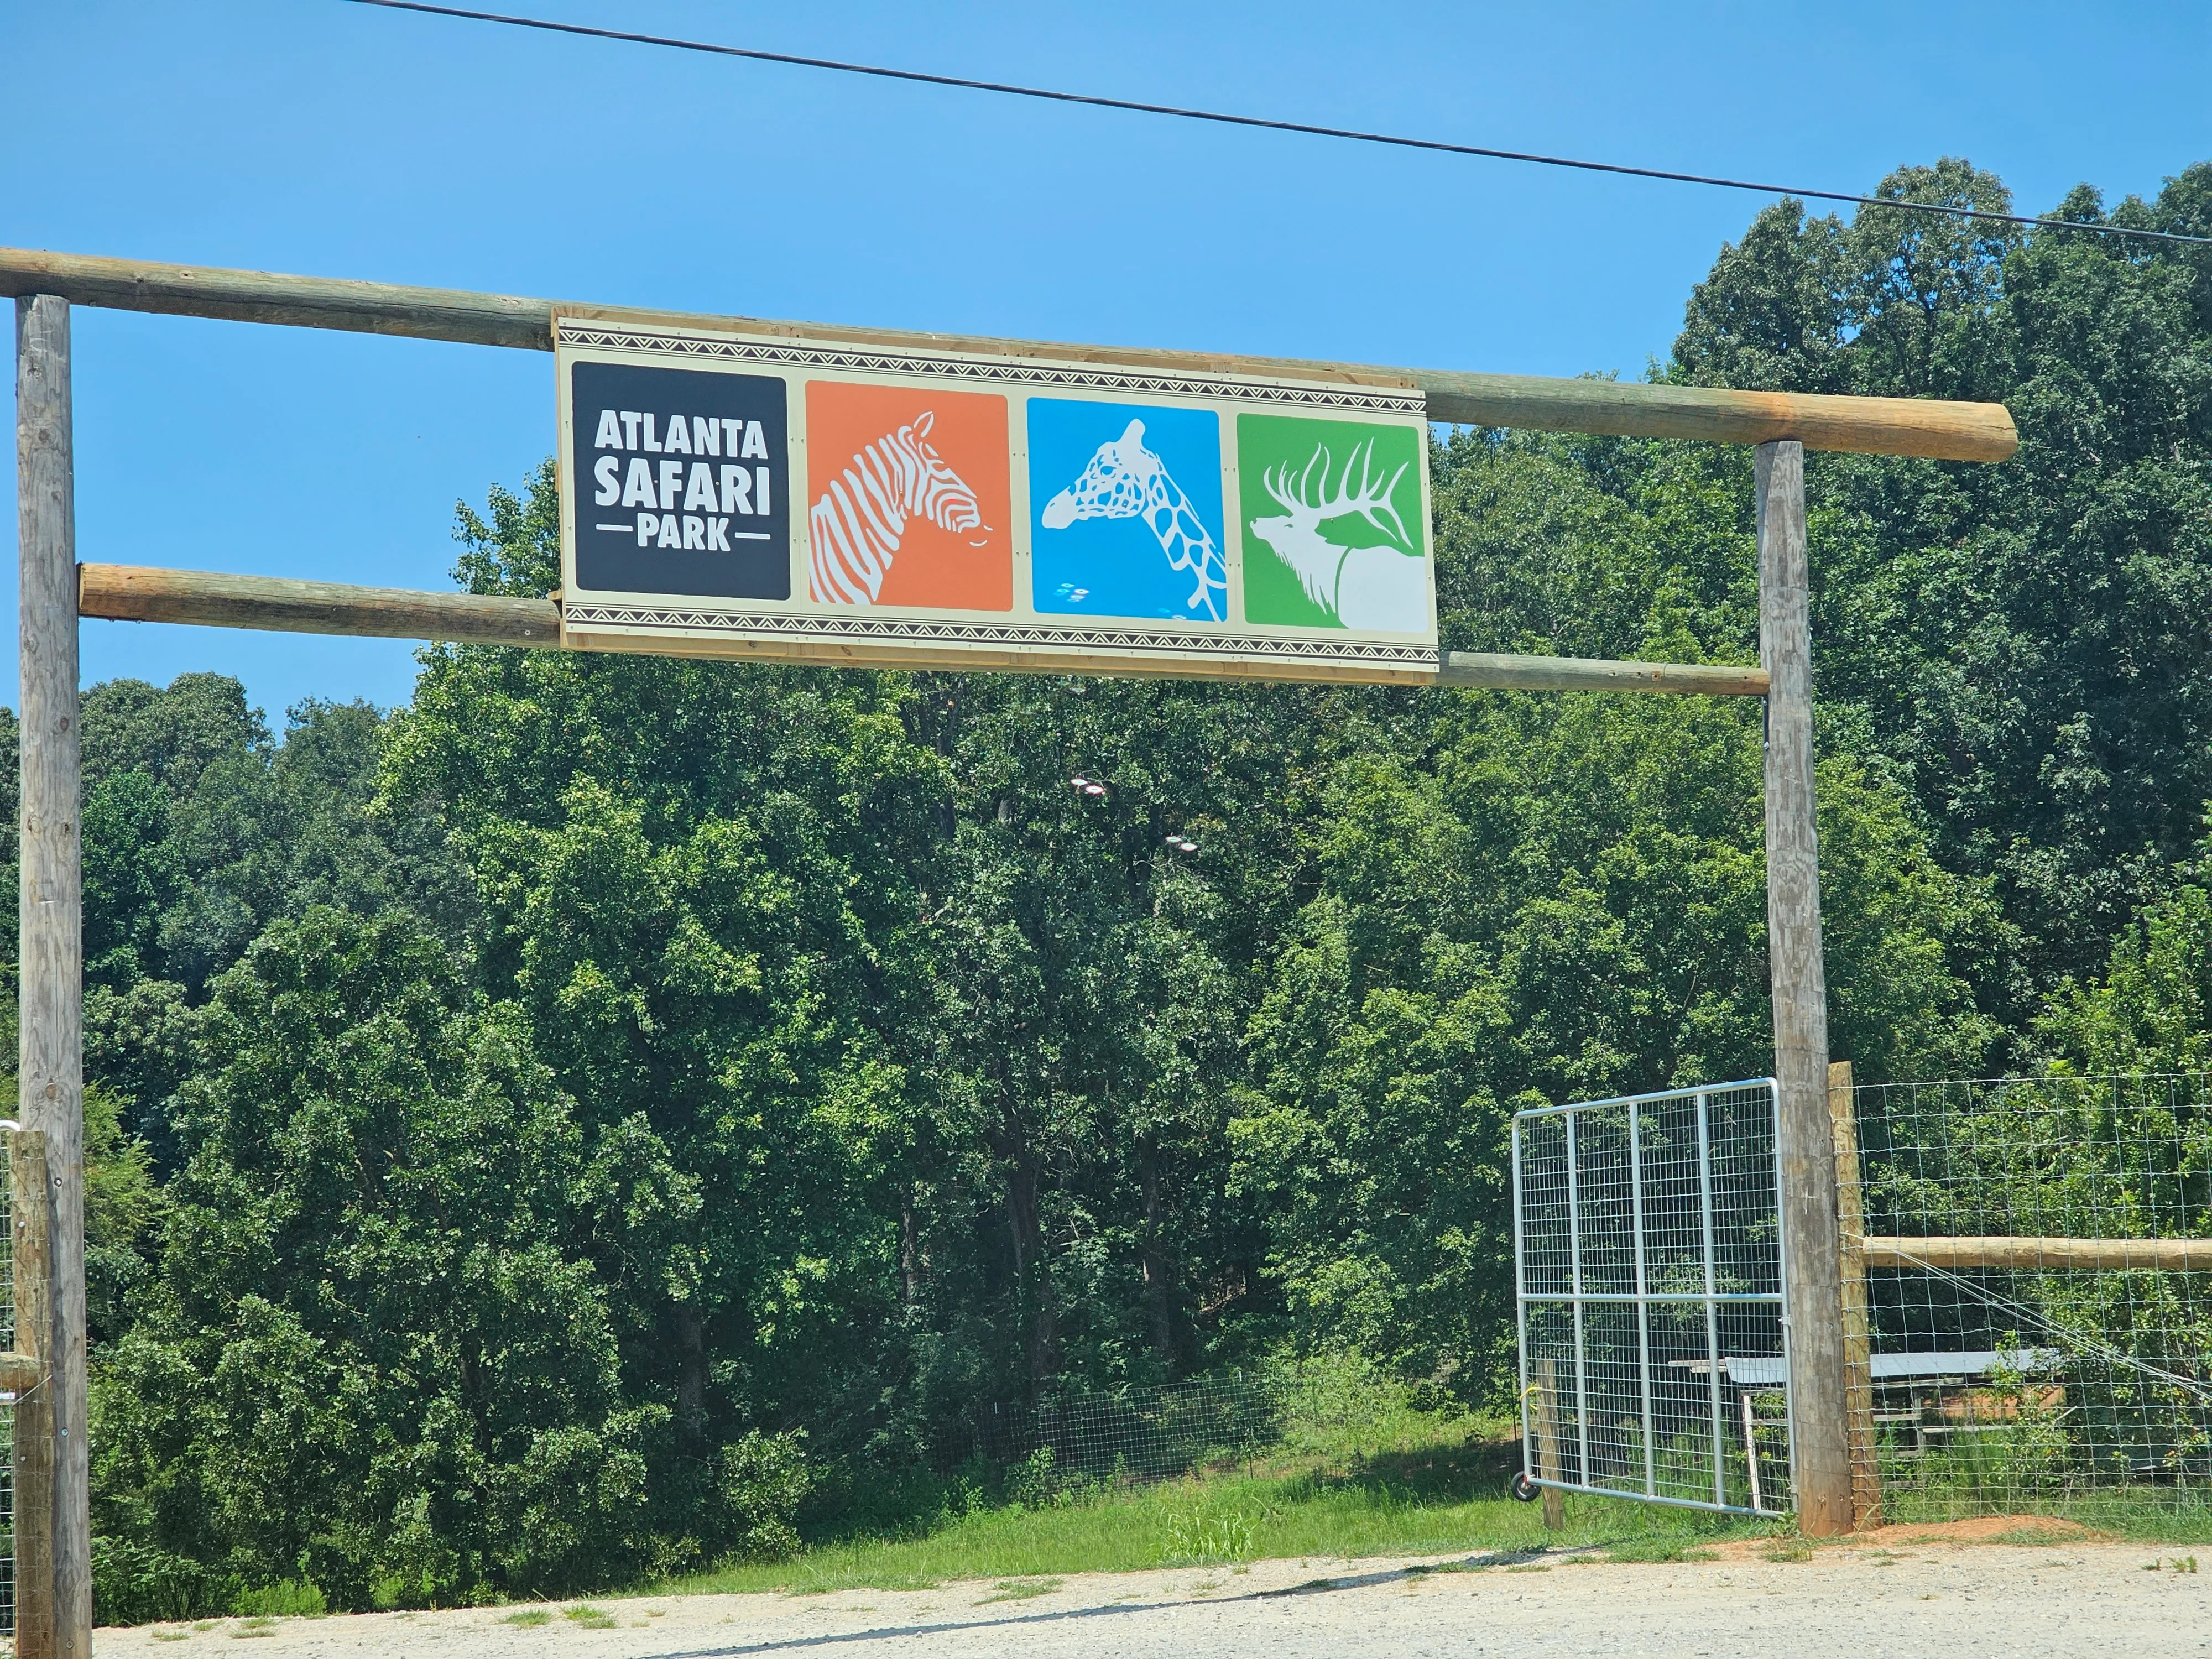 Adventure that You Can Touch: Atlanta Safari Park Review